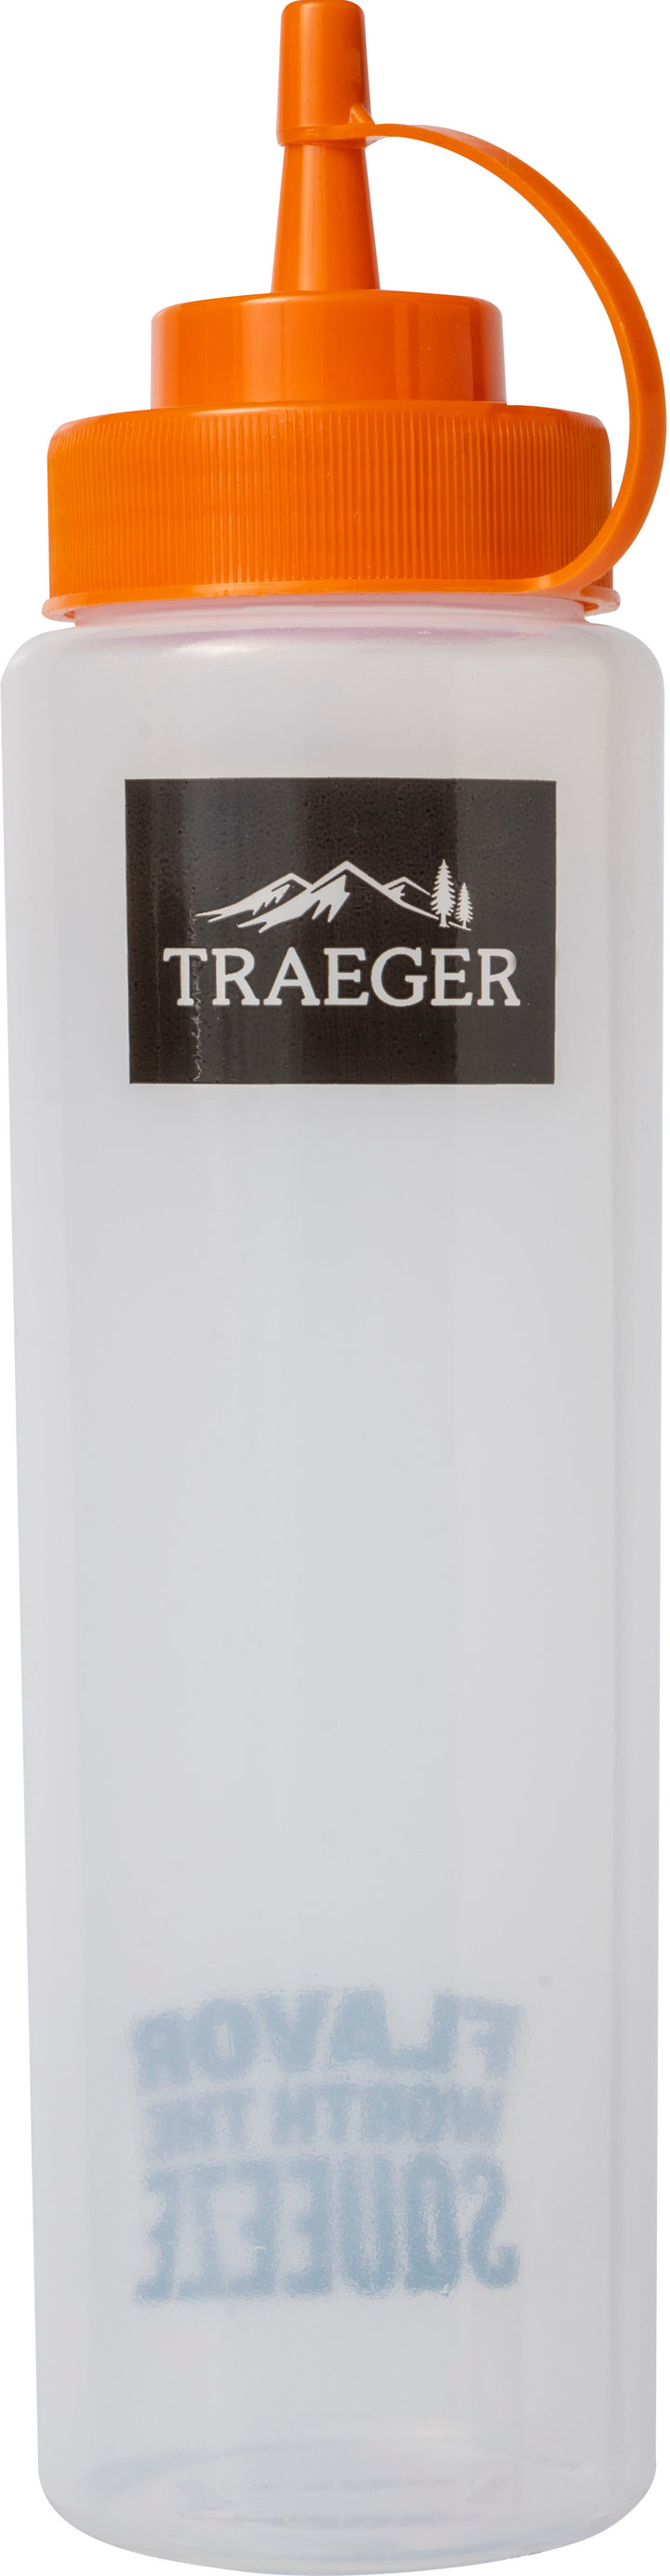 Traeger Grills - Flat Top Essential Bundle - Multi_6